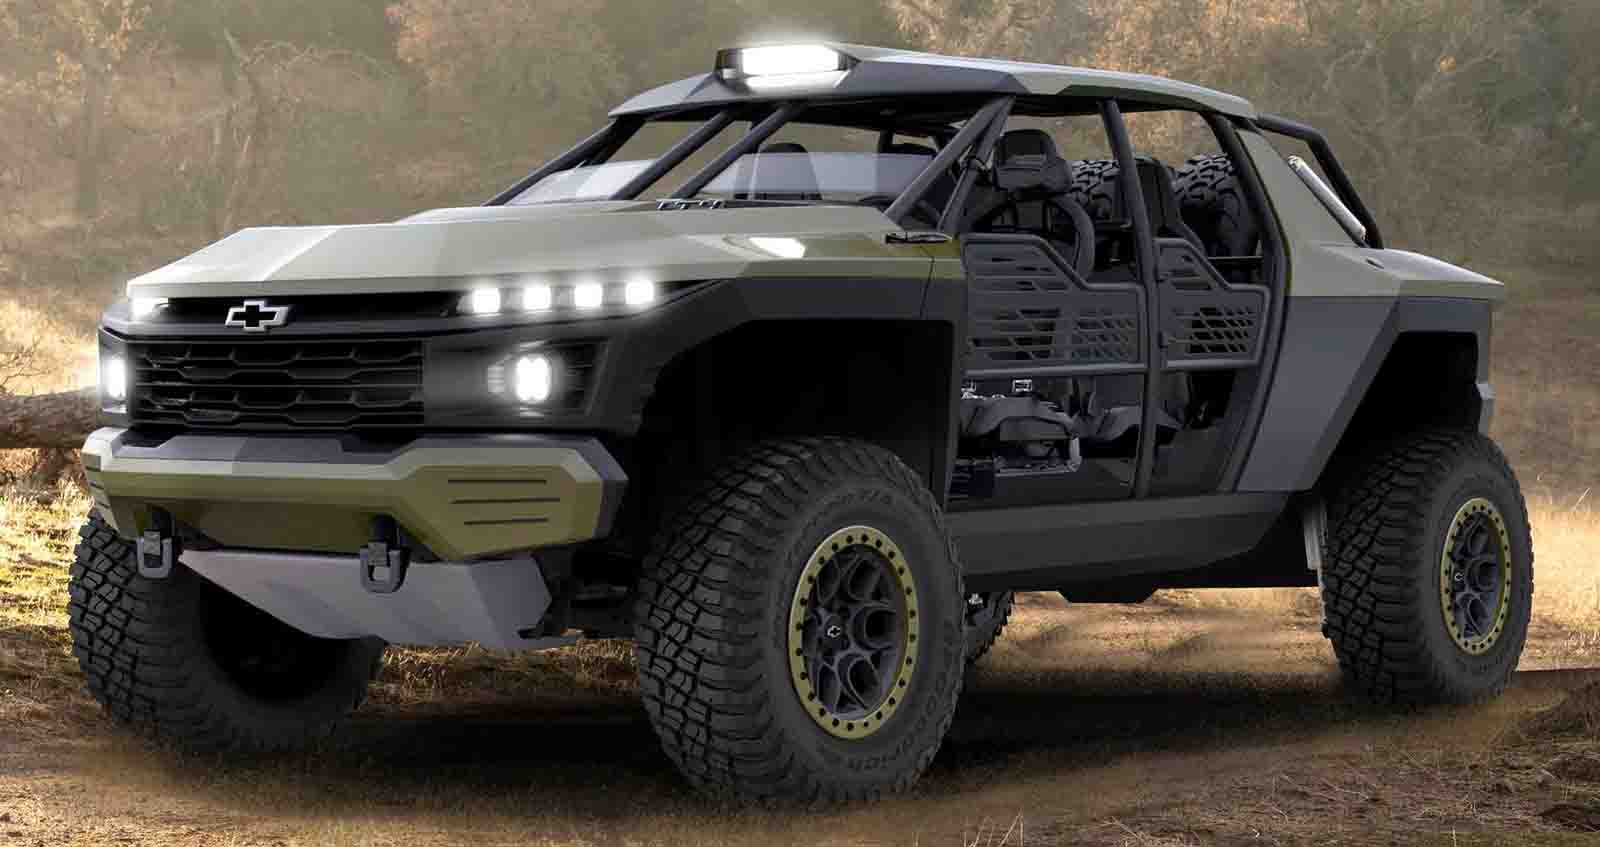 Chevy Beast Concept เอาใจสายออฟโรต บนขุมพลัง 650 แรงม้า